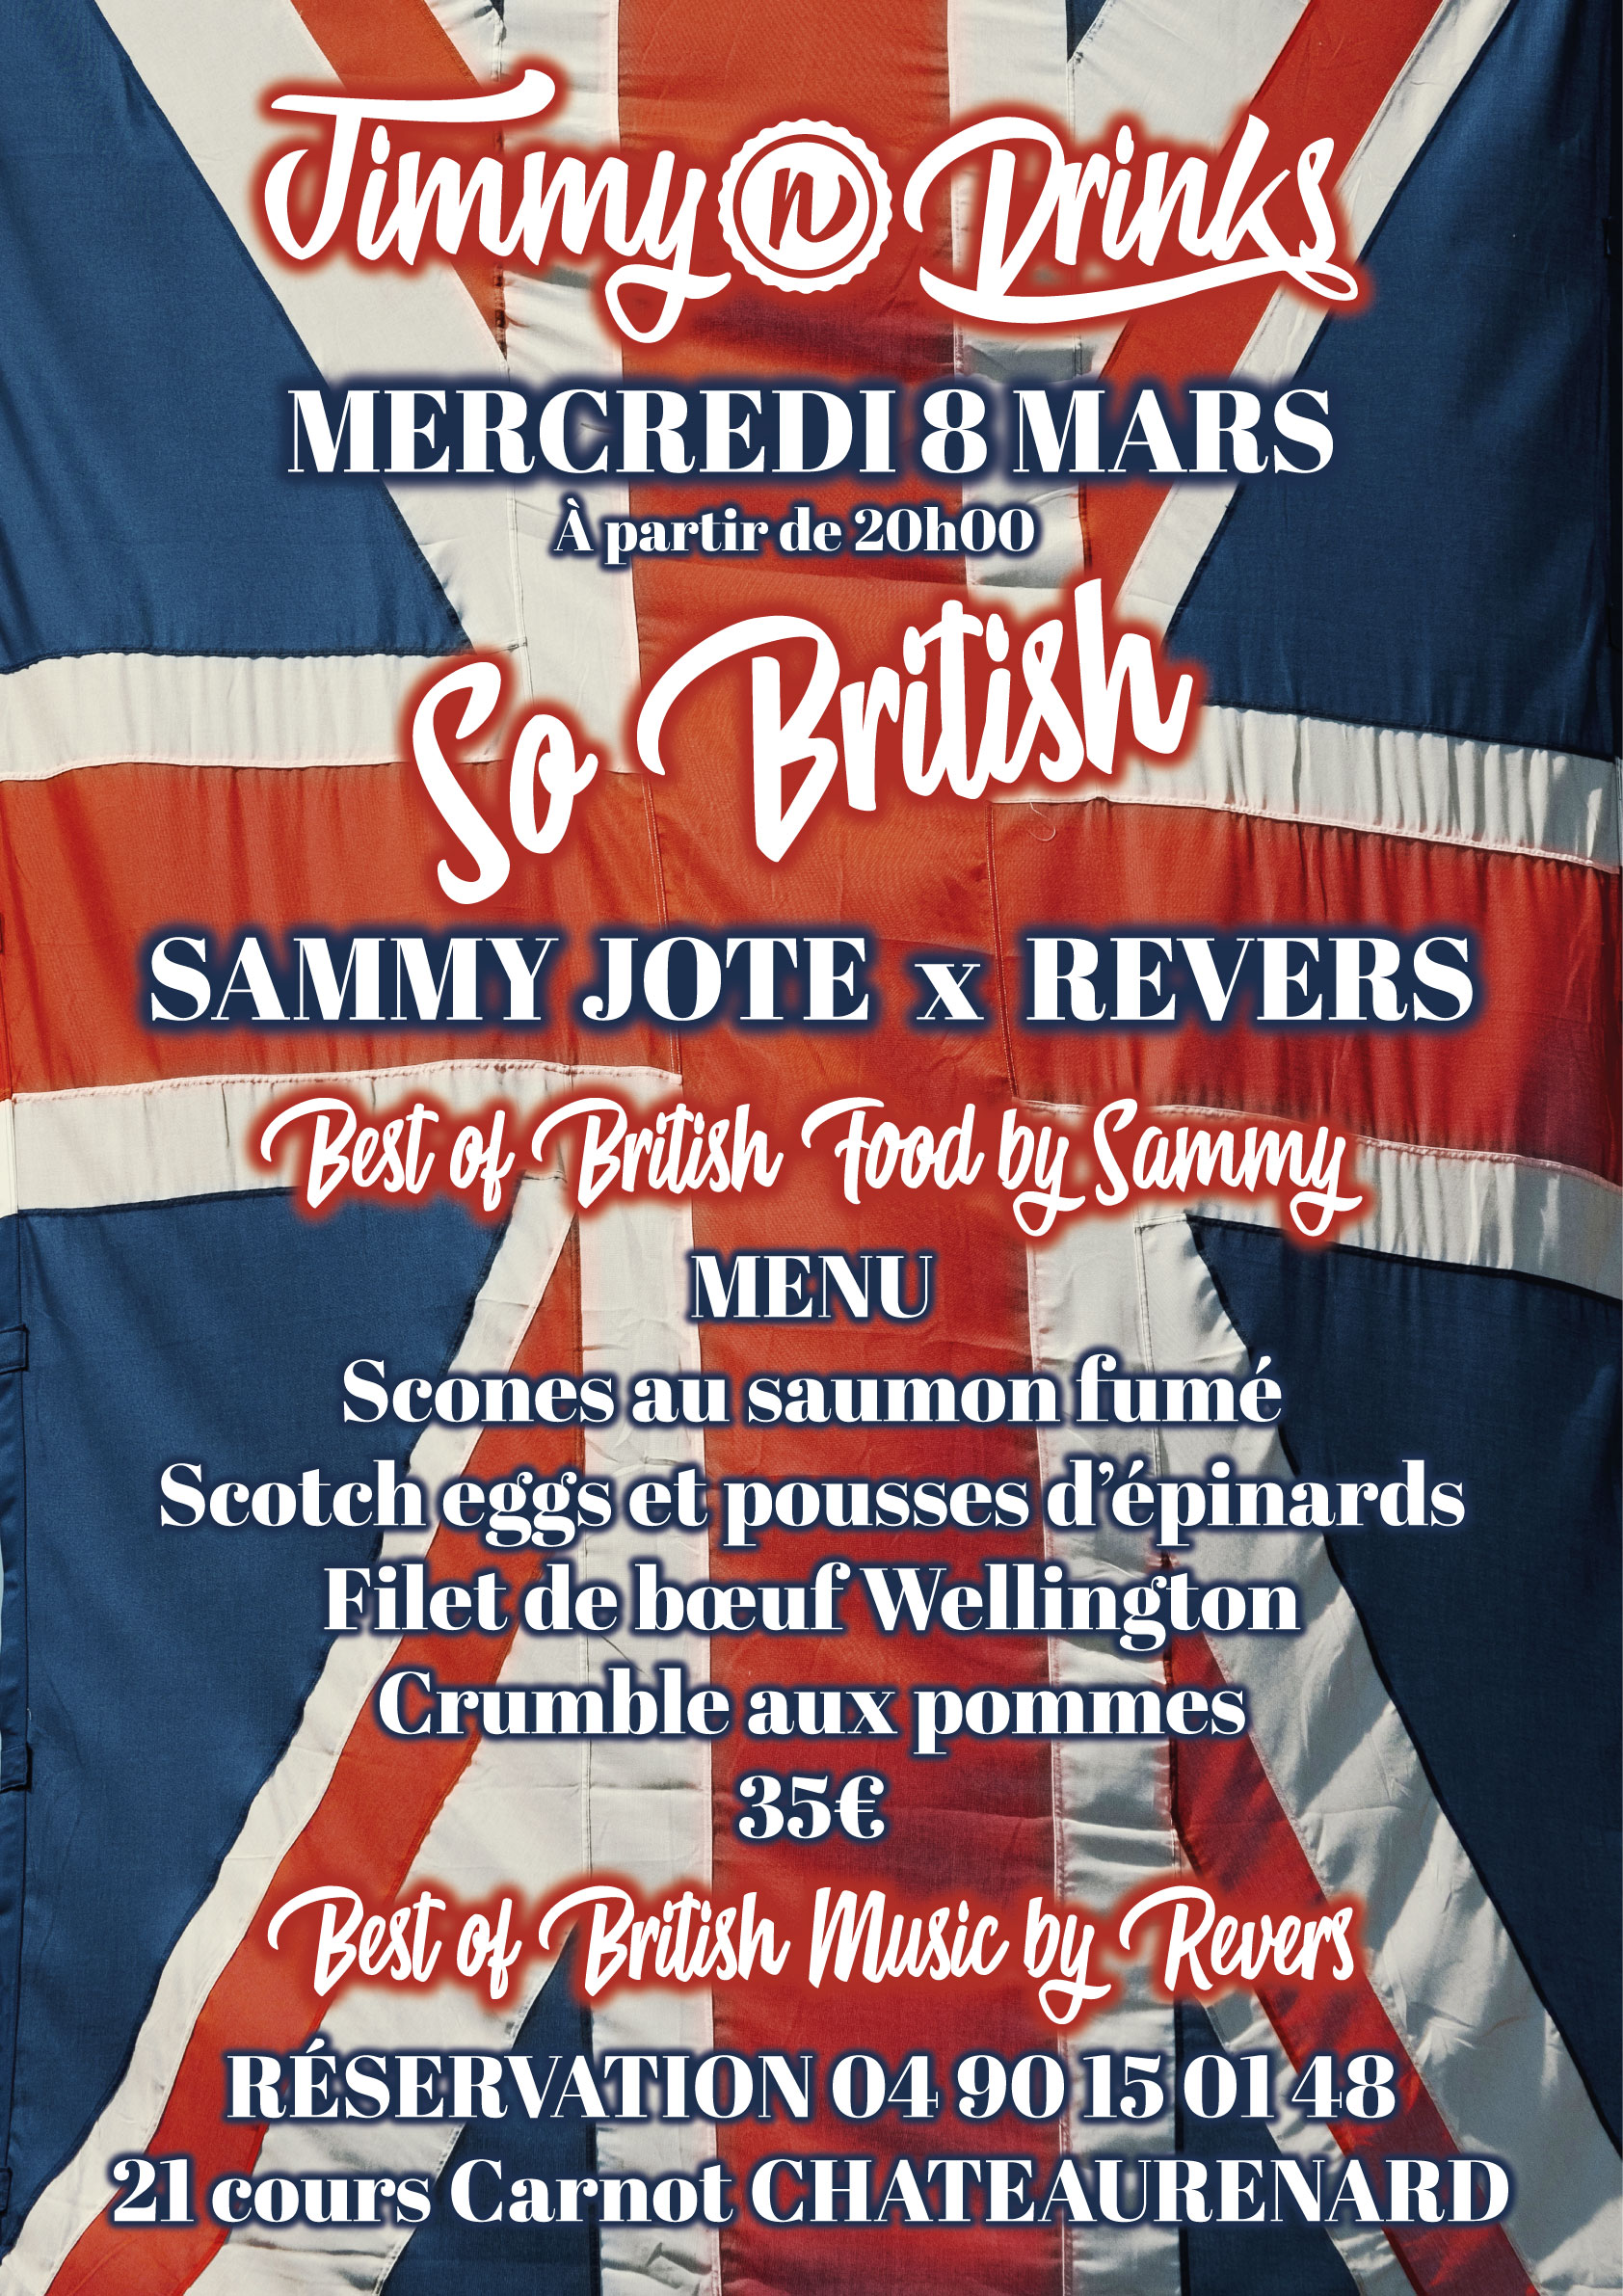 So British by Sammy Jote x Revers